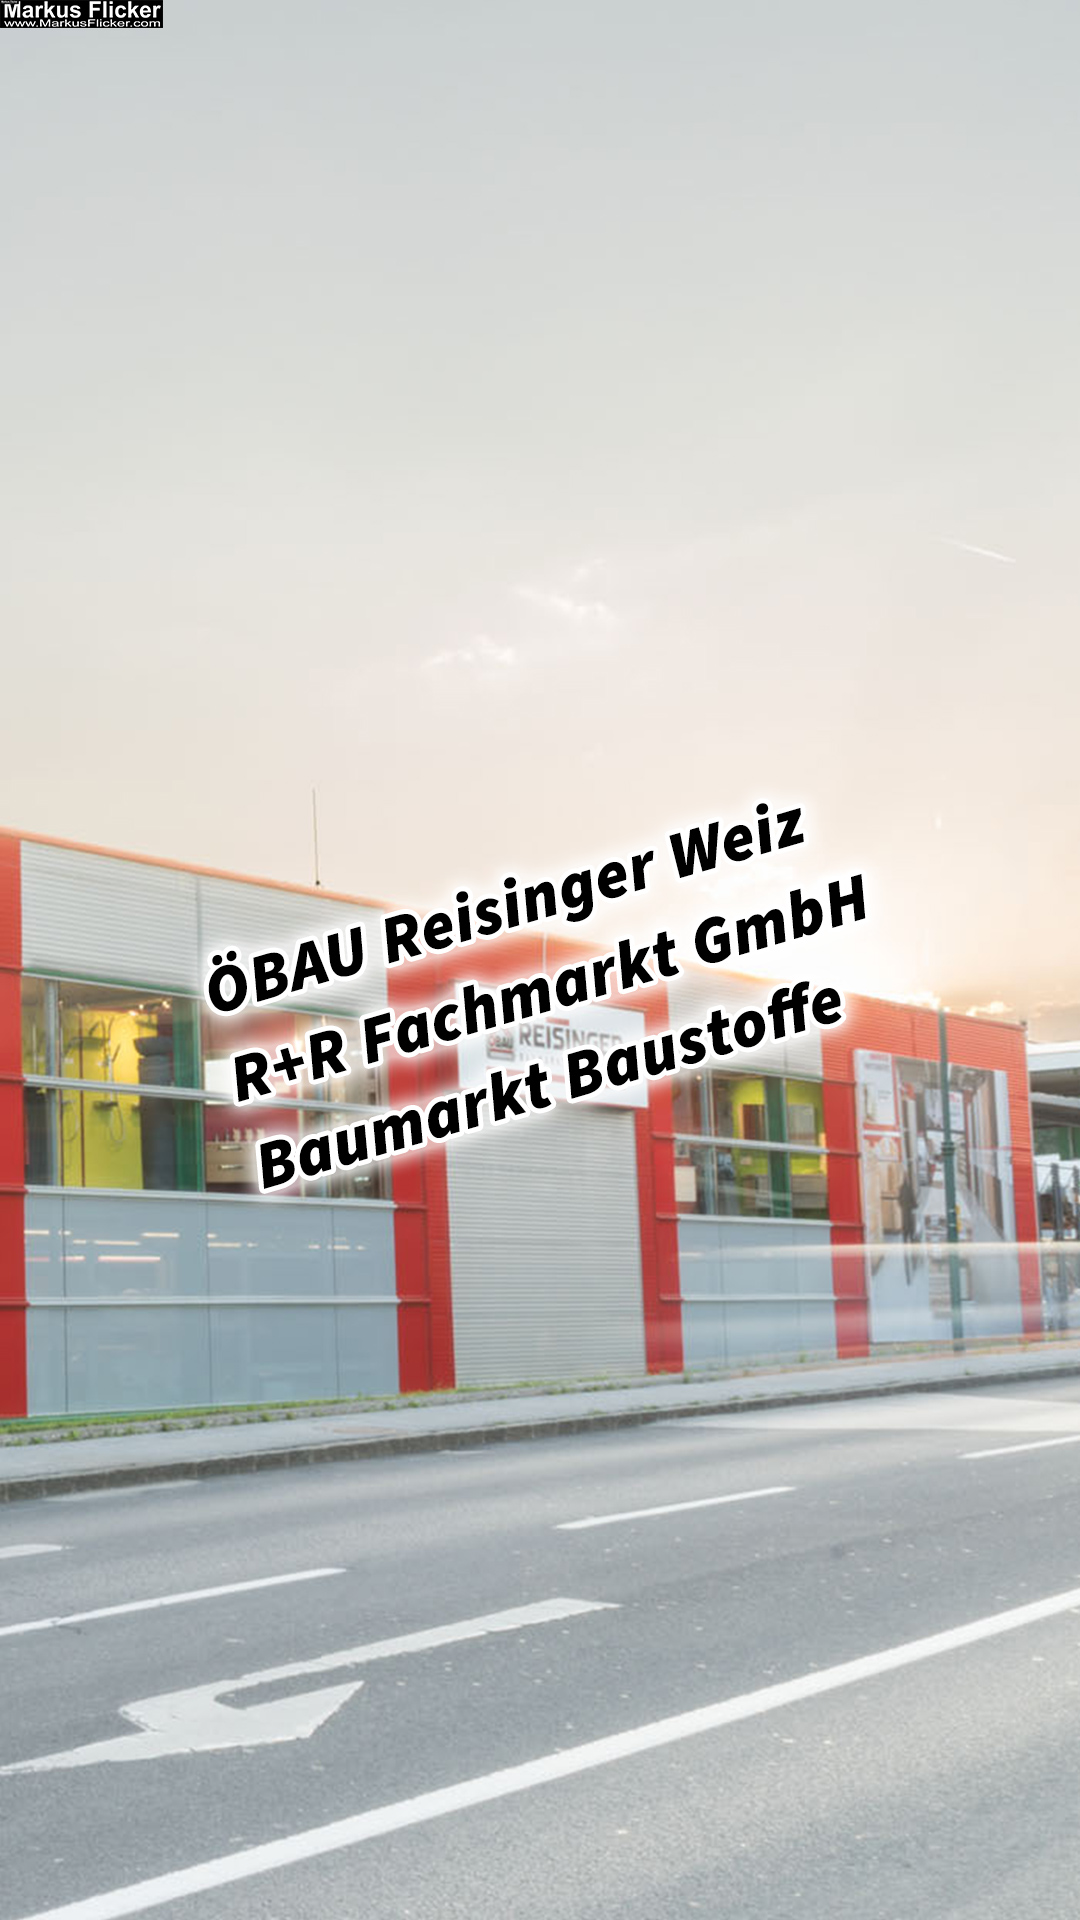 ÖBAU Reisinger (R+R Fachmarkt GmbH) Baumarkt Baustoffe